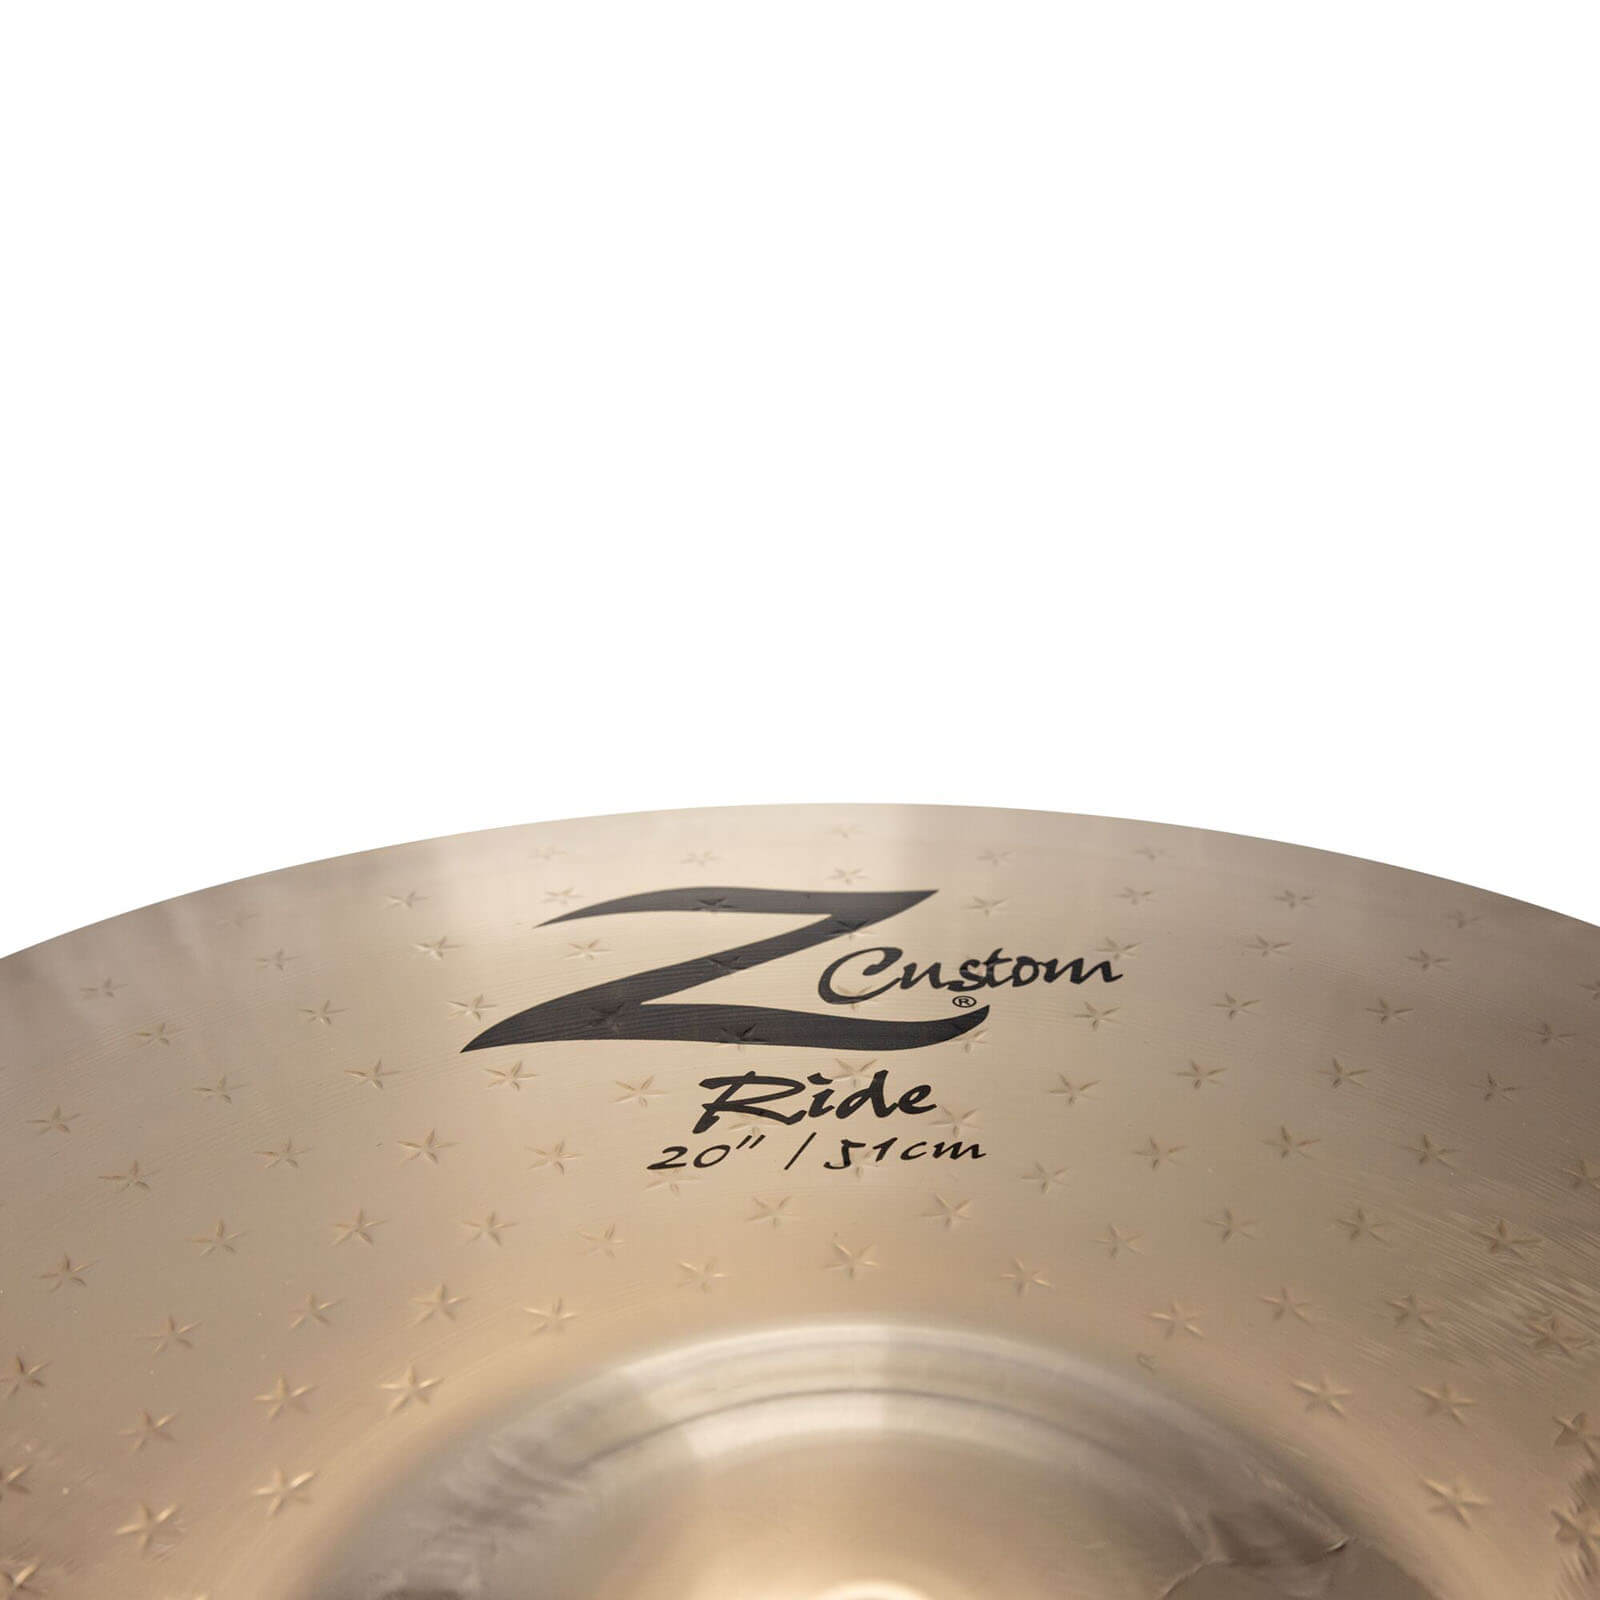 Zildjian Z Custom Ride Cymbal 20